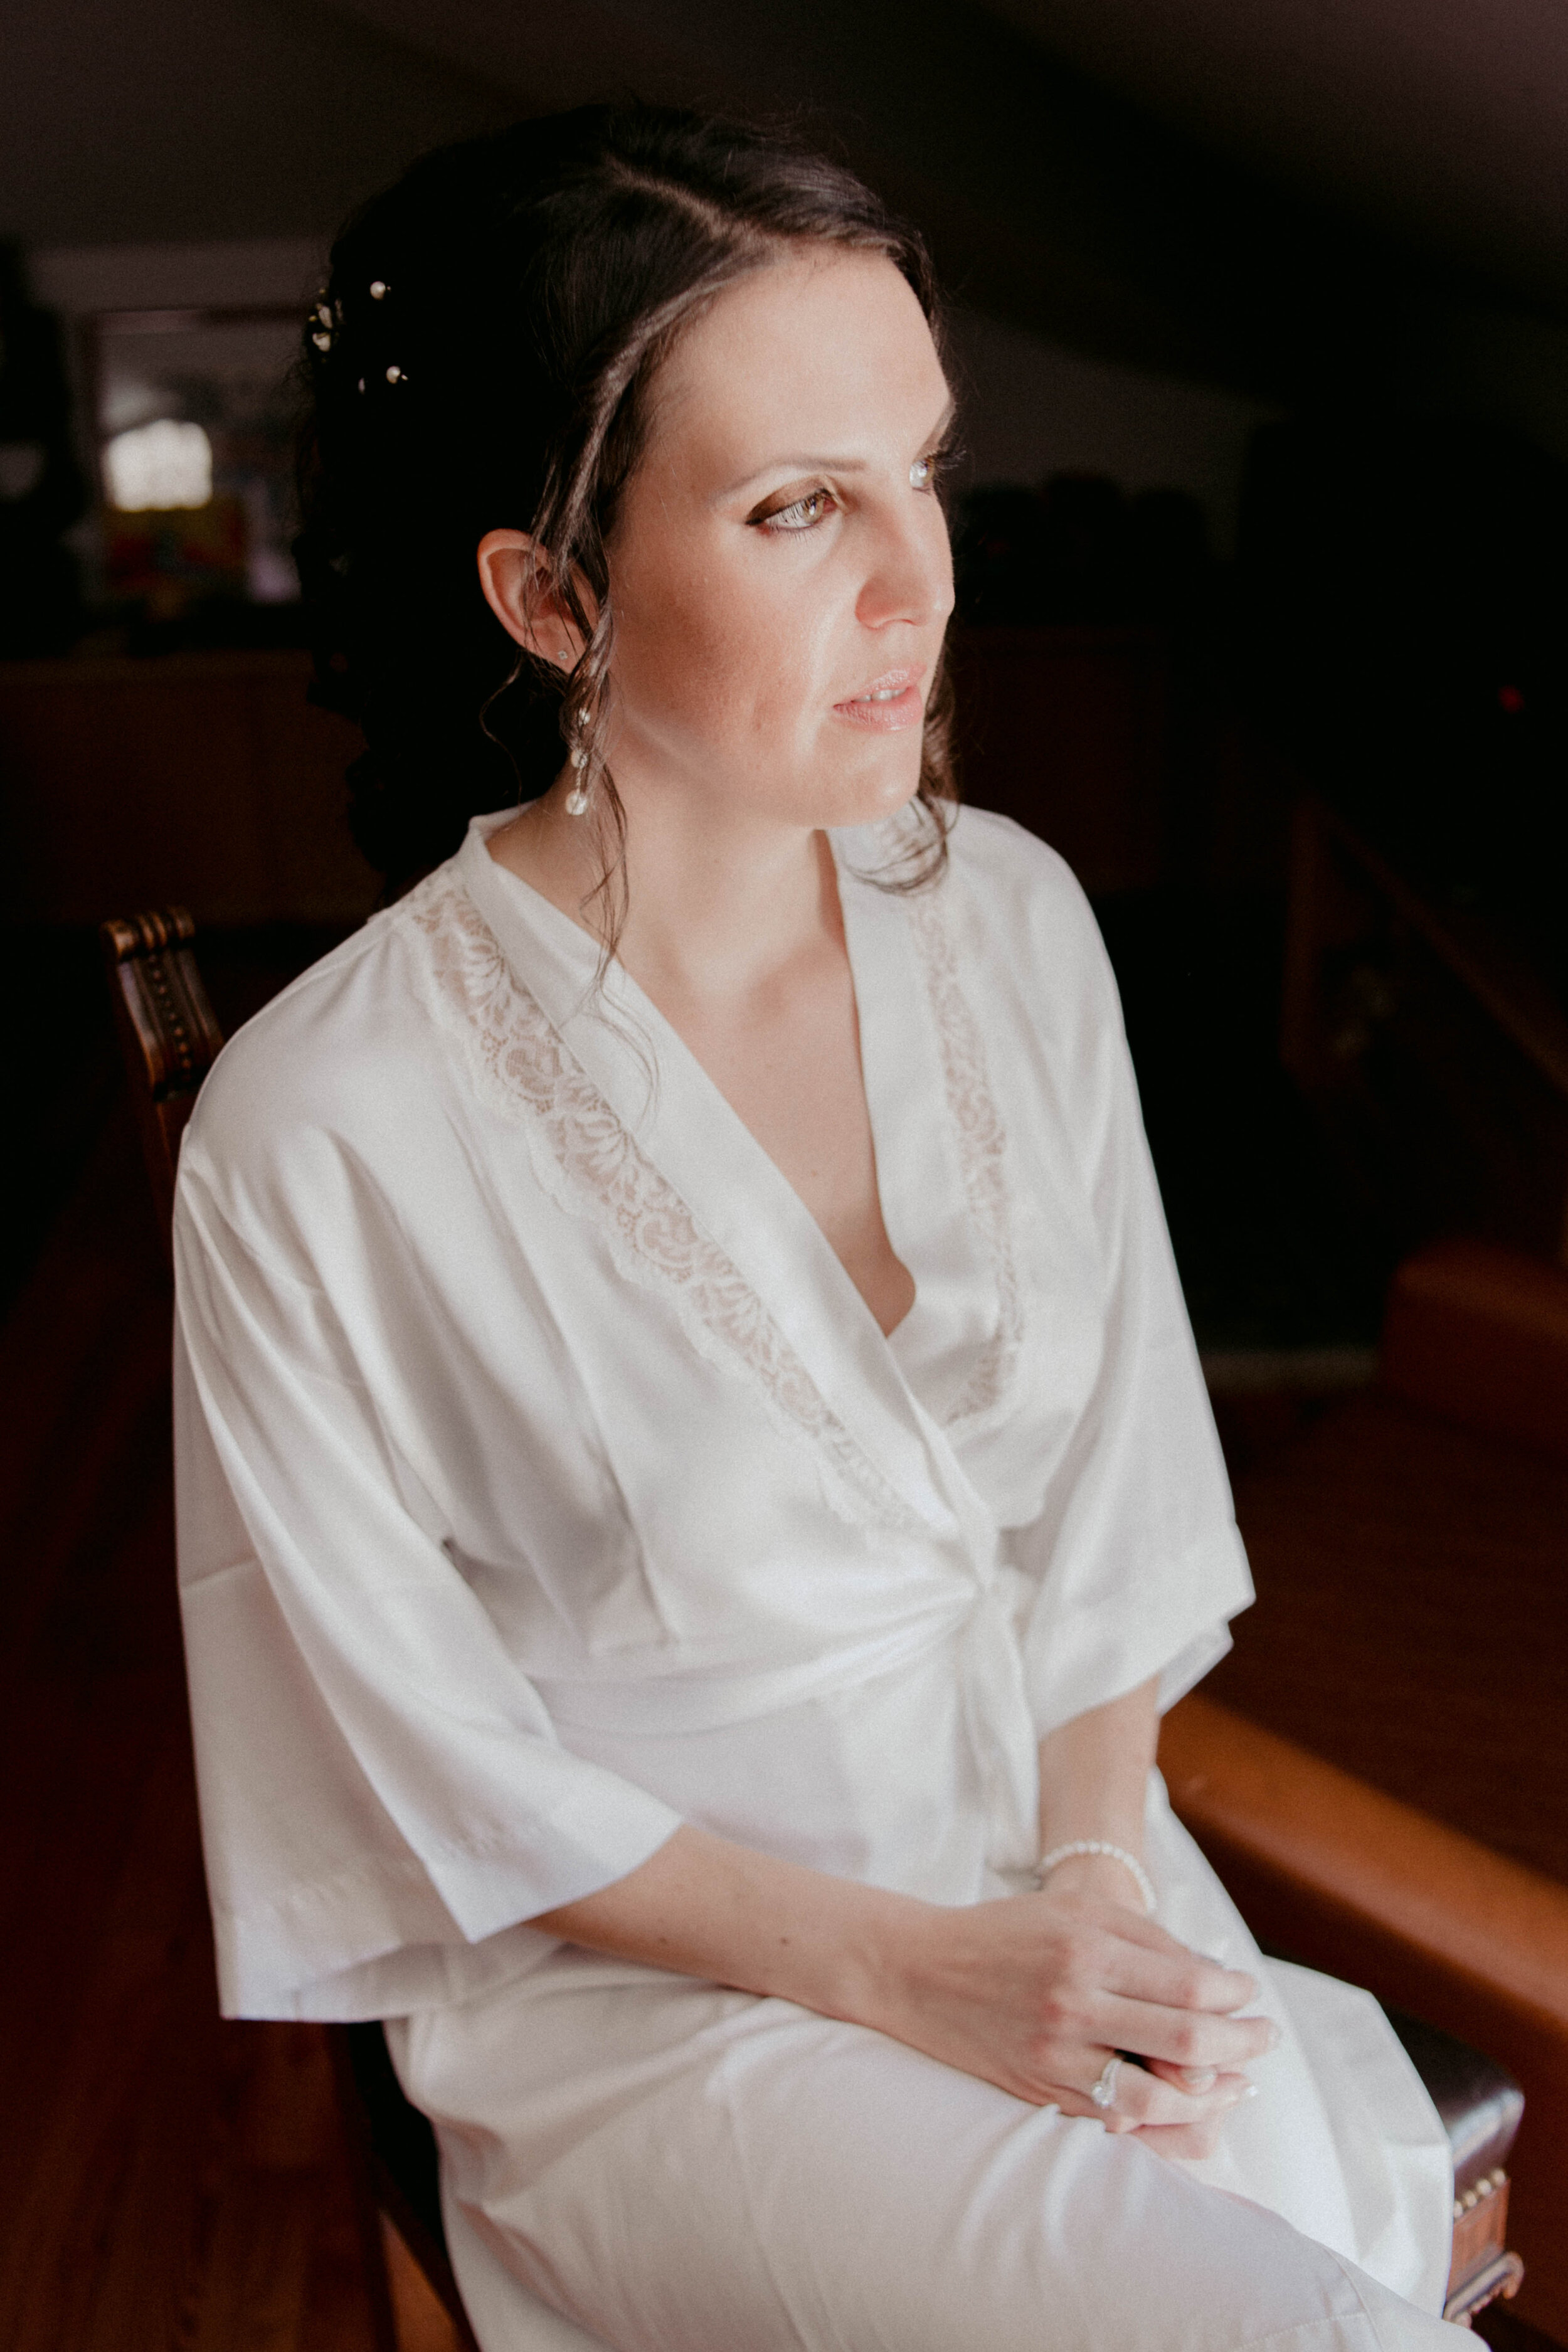 008 - Preparazione sposa - Miriam Callegari Fotografa.JPG